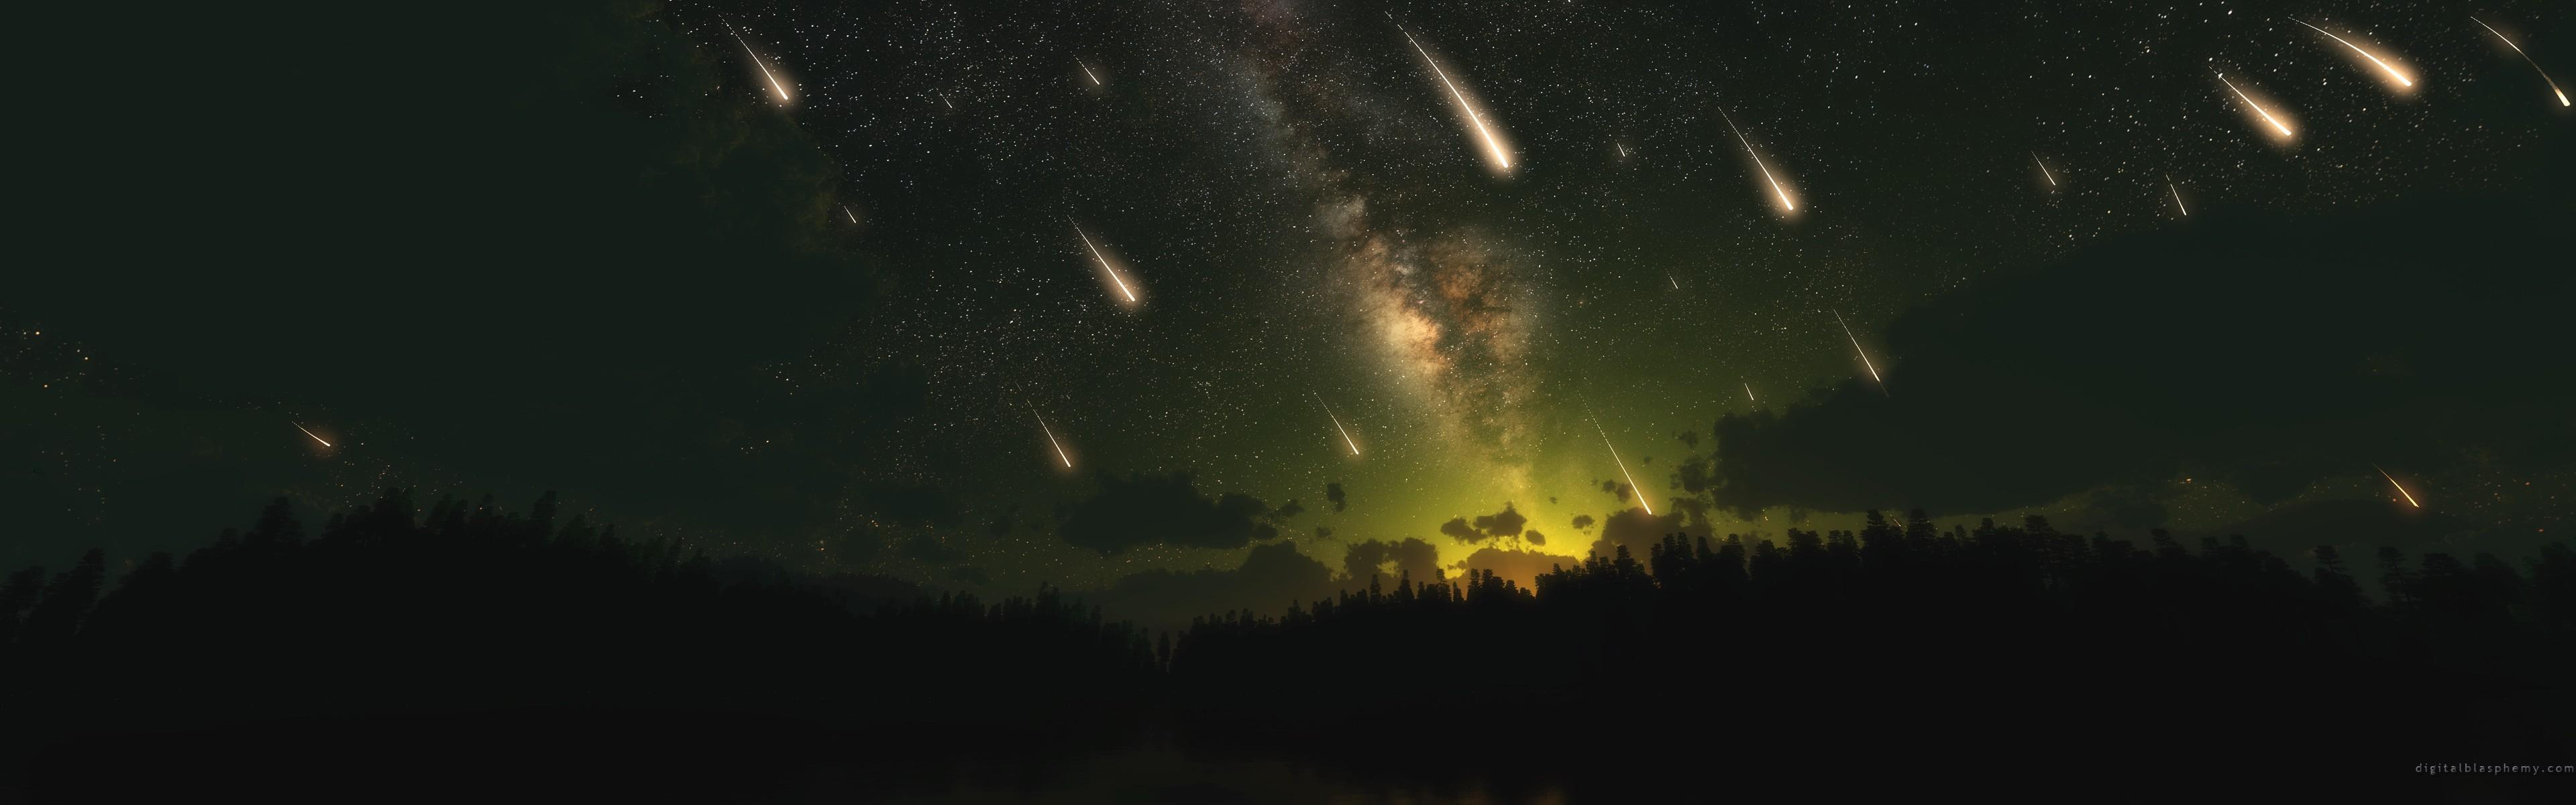 Meteors Dark Night, HD Digital Universe, 4k Wallpaper, Image